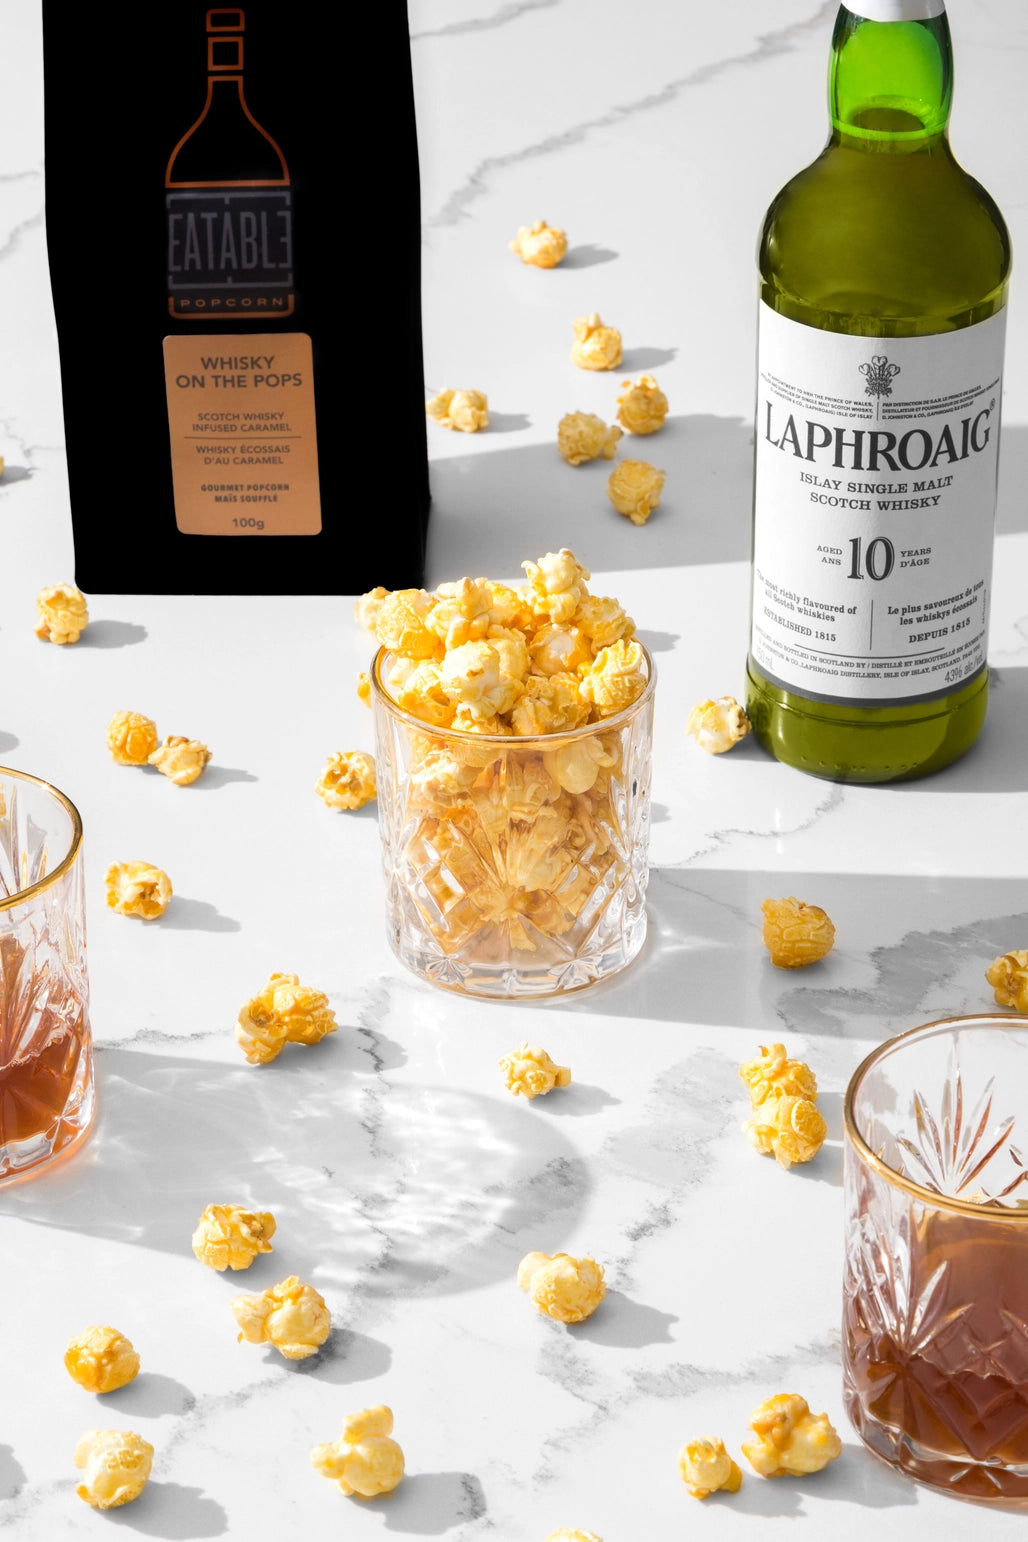 Whisky On the Pops Gourmet Popcorn